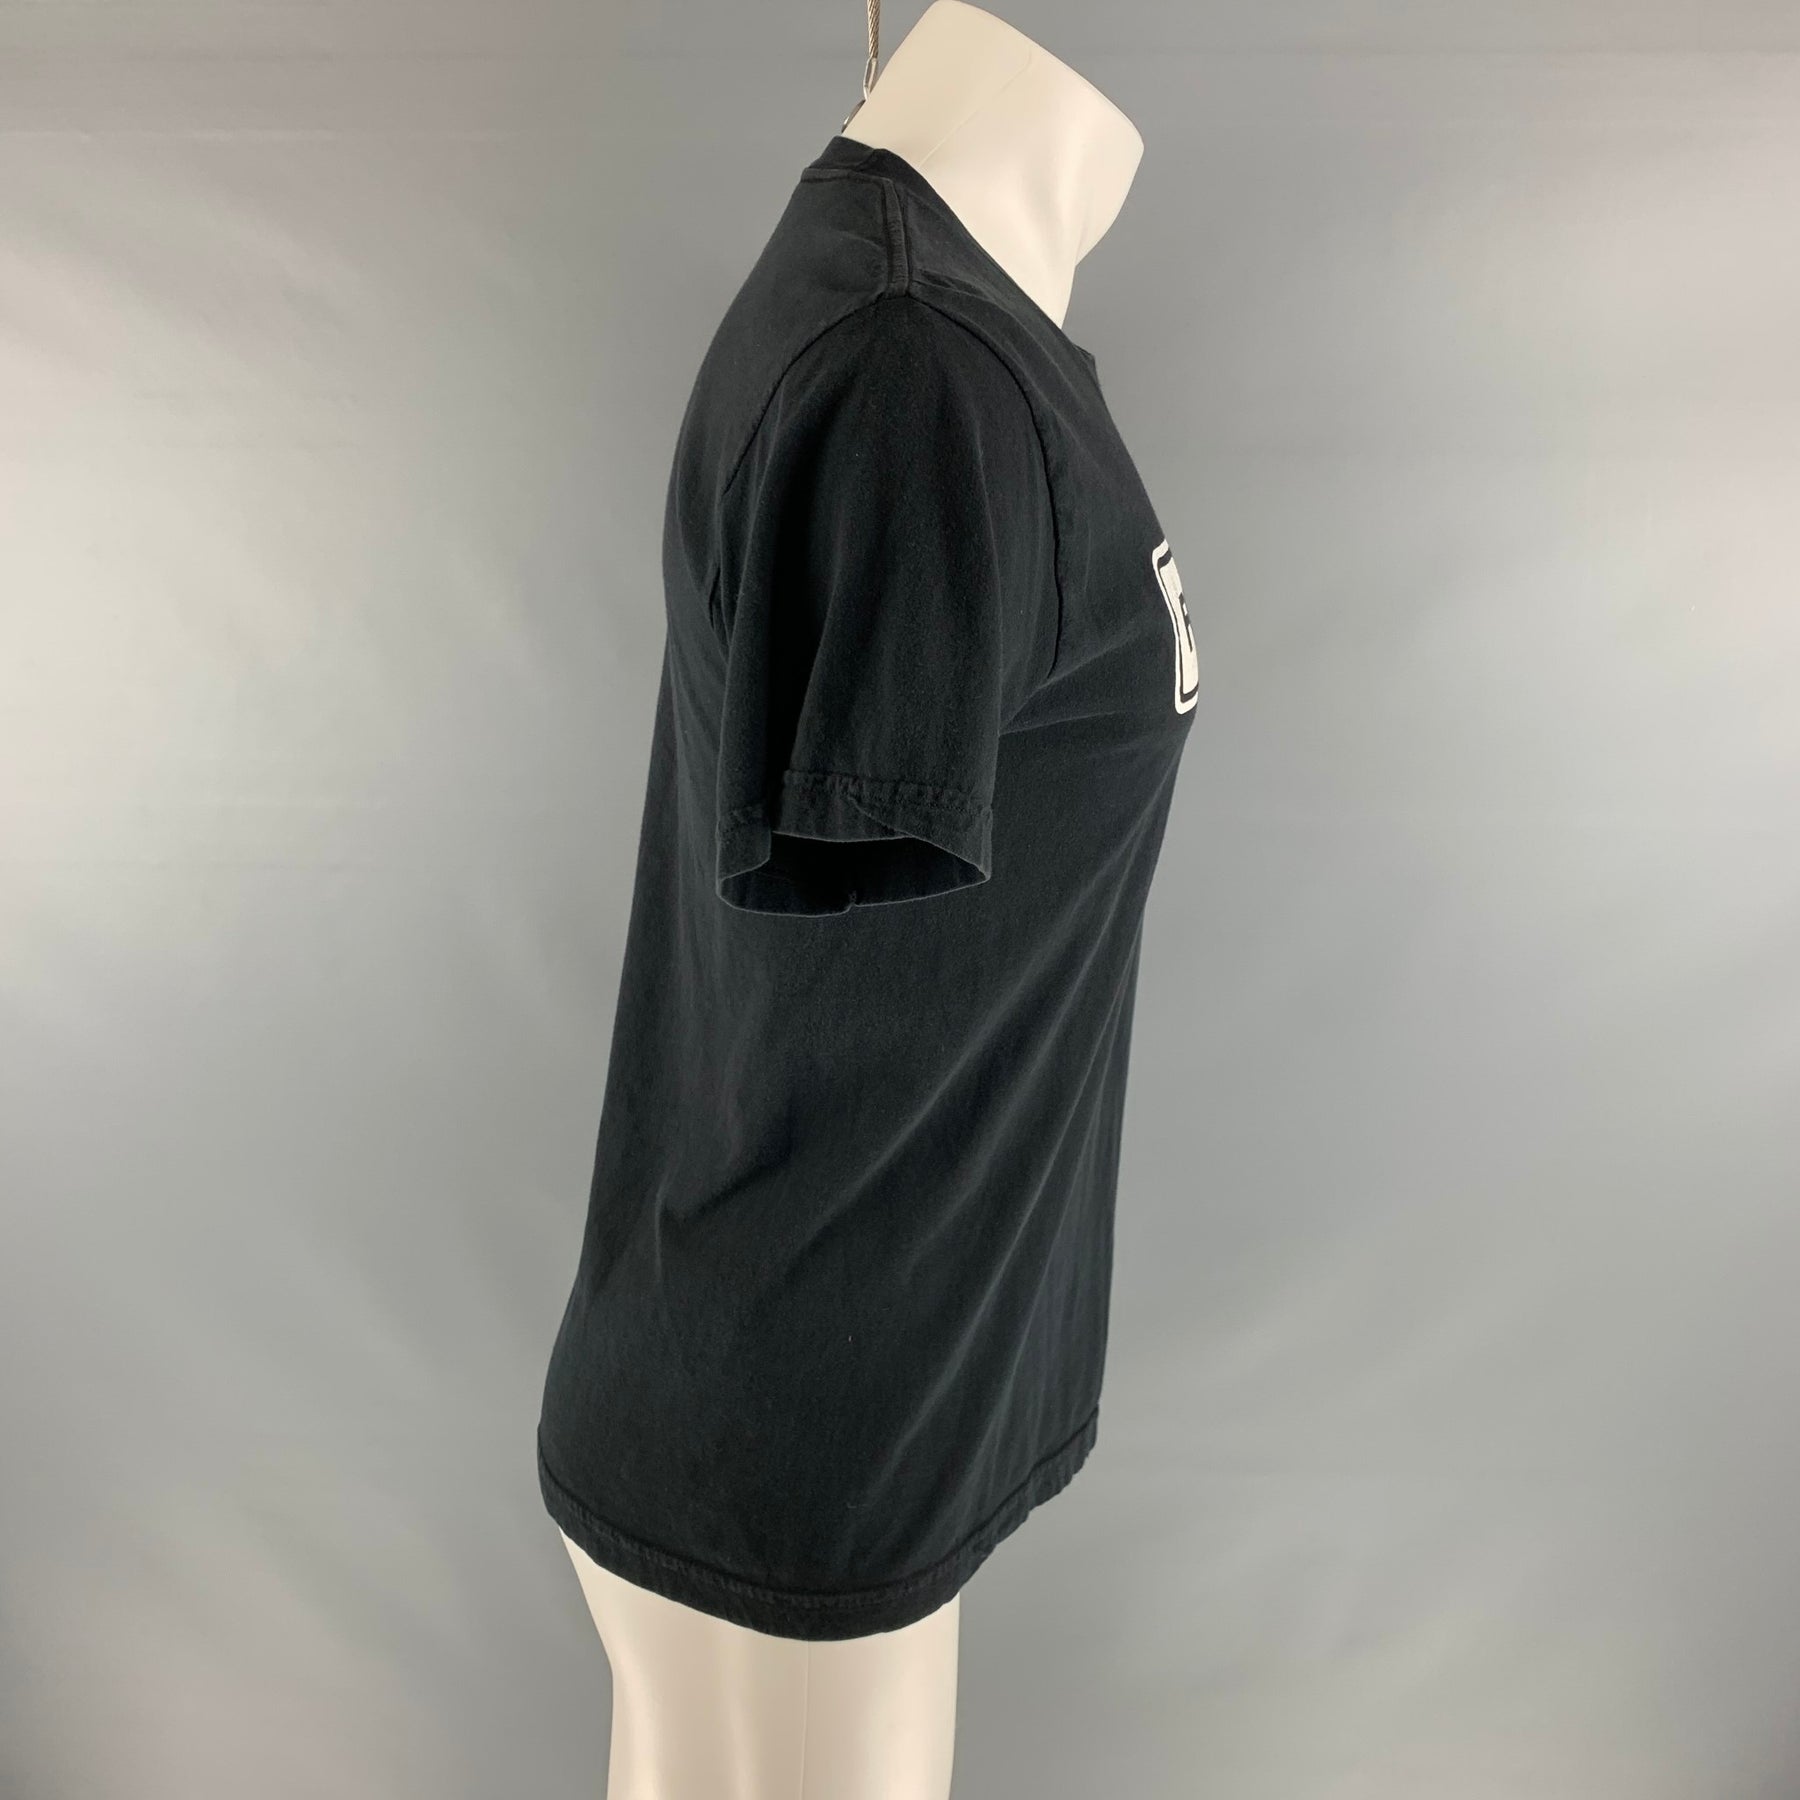 SUPREME x HANES Size L Black White Checkered Cotton Crew-Neck T-shirt – Sui  Generis Designer Consignment